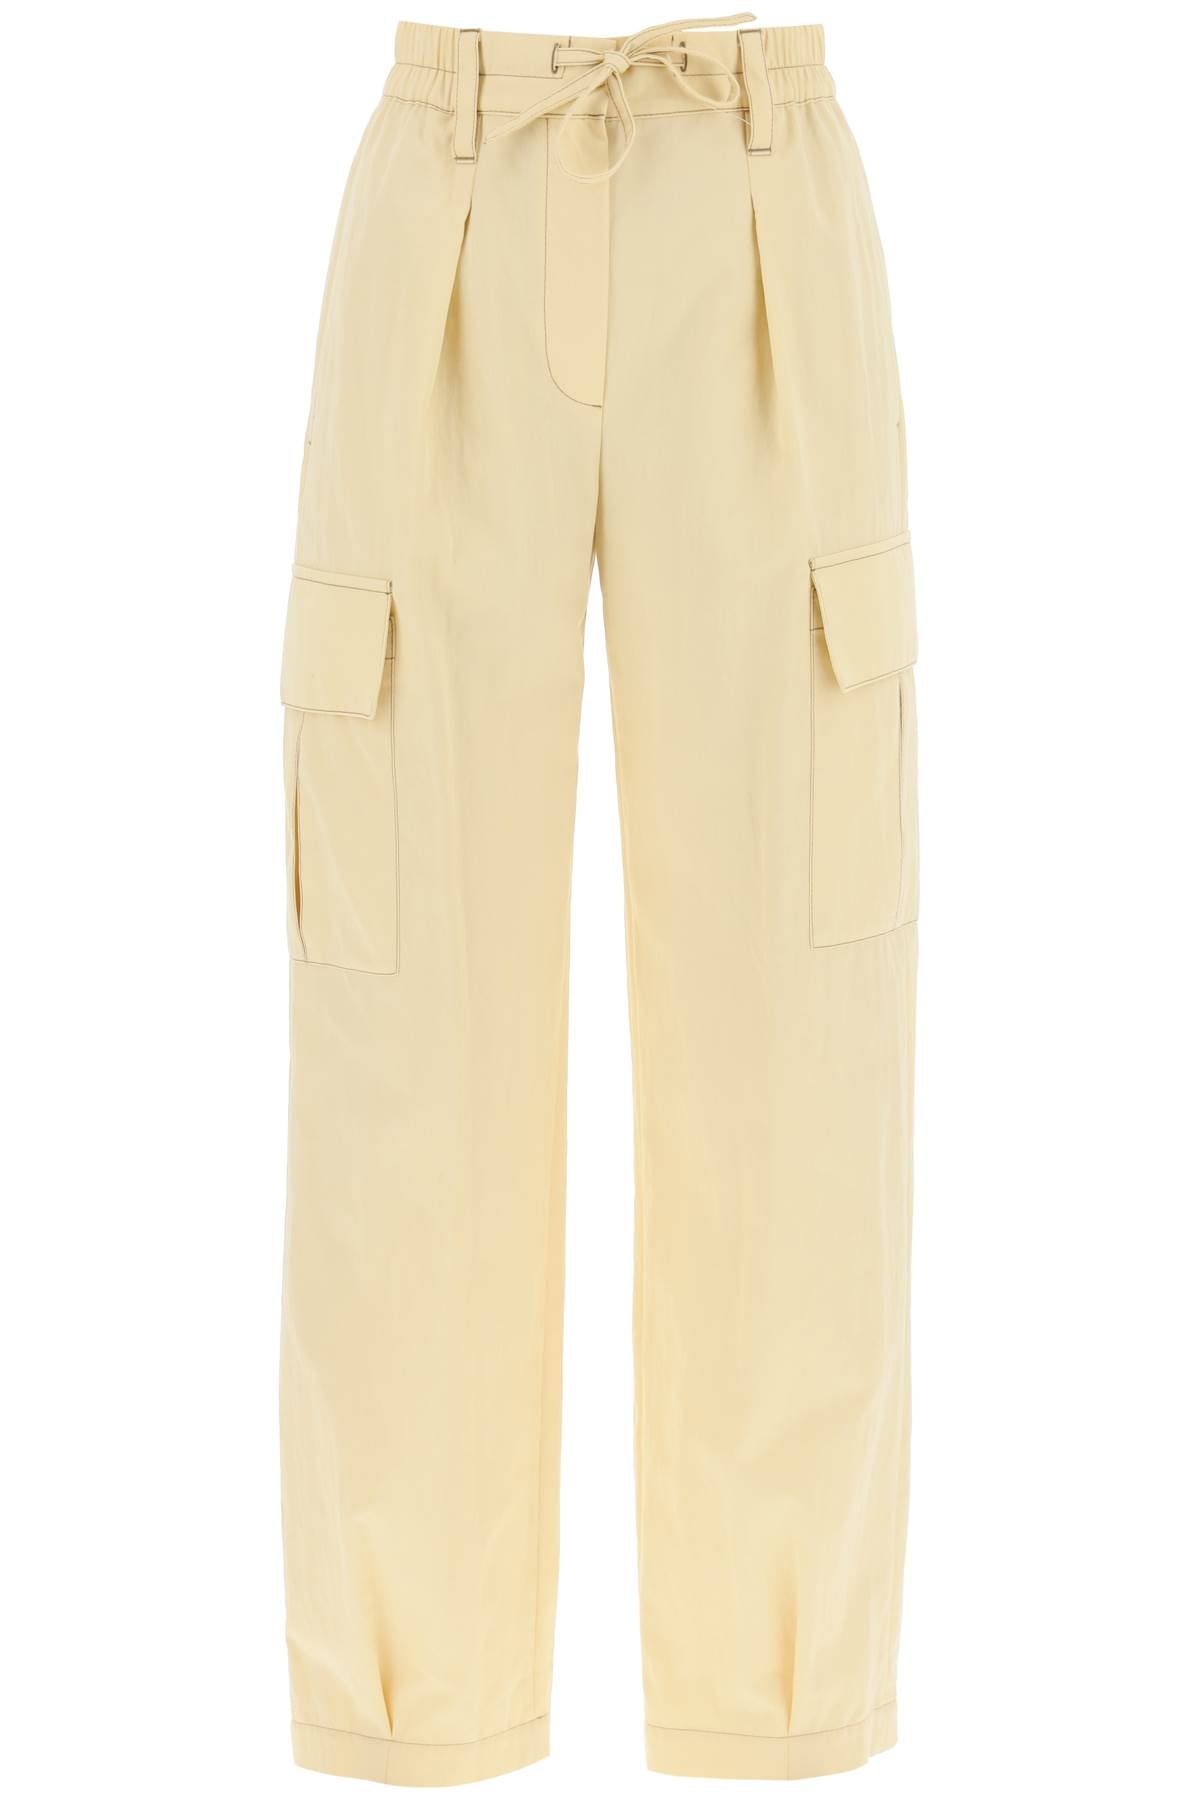 Shop Brunello Cucinelli Yellow Utility Pants For Women